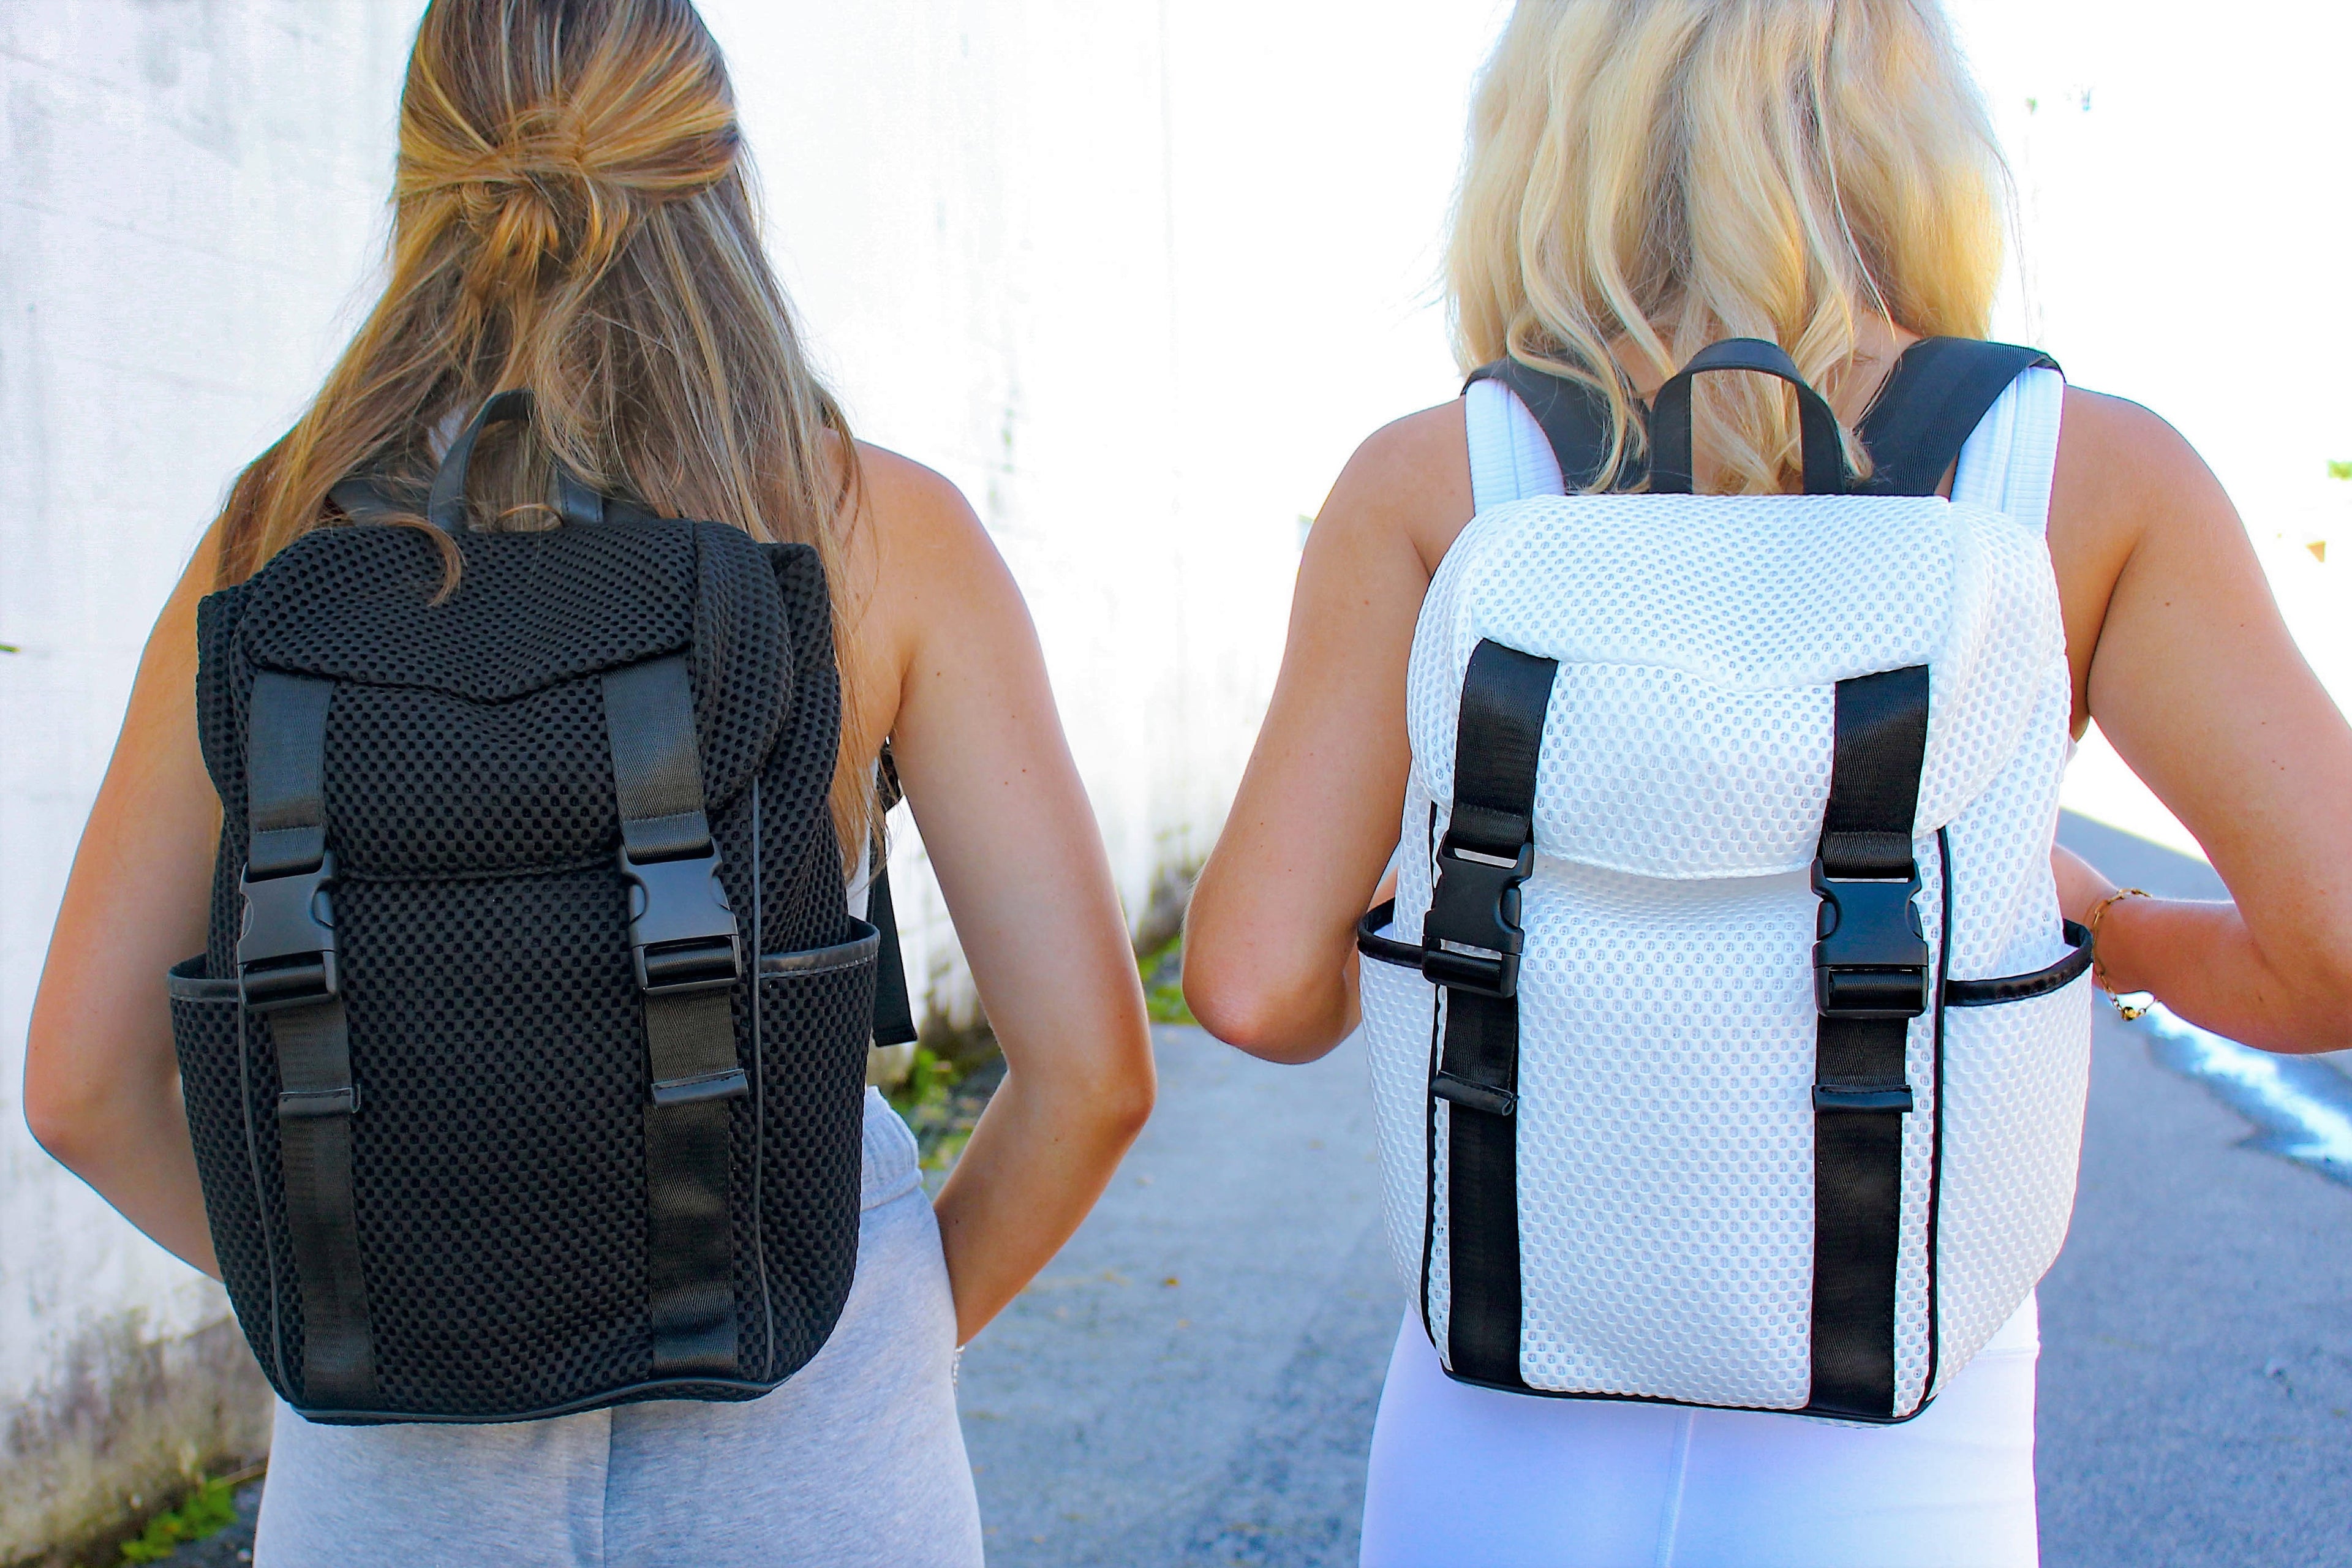 two girls wearing mesh backpacks